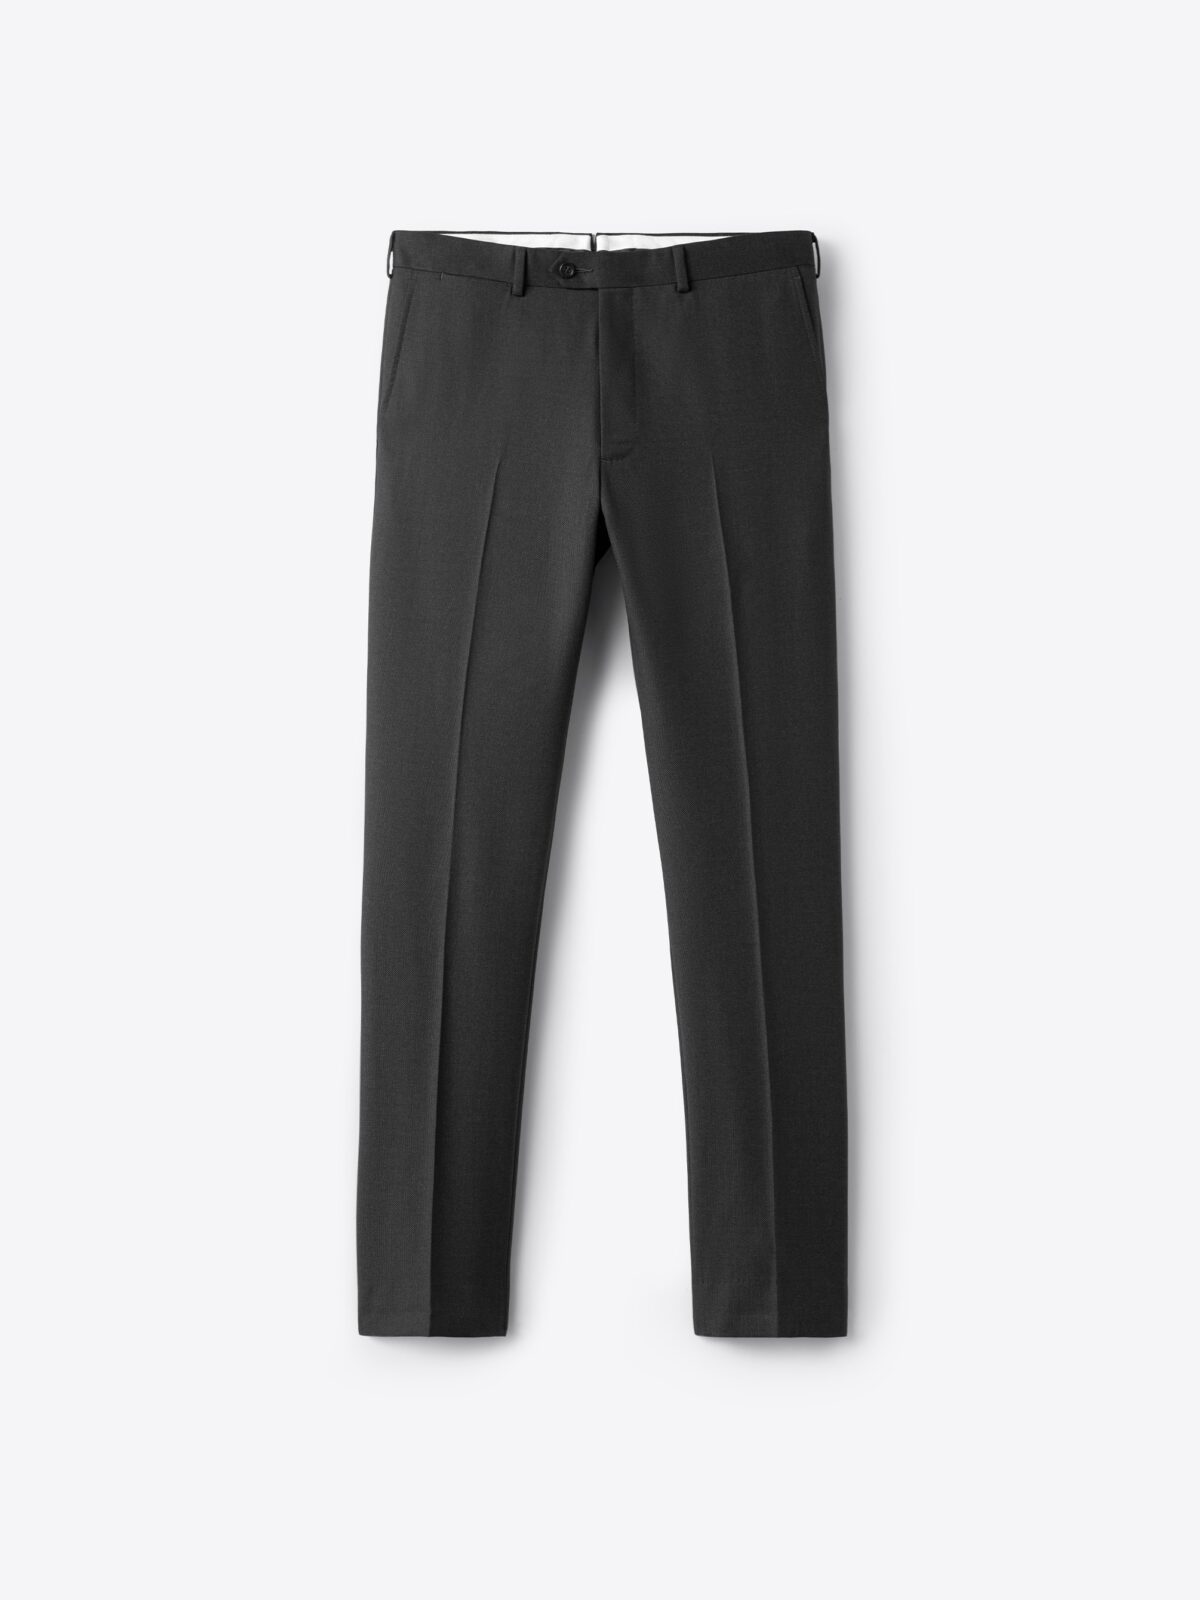 100% Cotton Grey Kung Fu Martial Arts Tai Chi Pant Trousers XS-XL or Tailor  Custom Made - Interact China